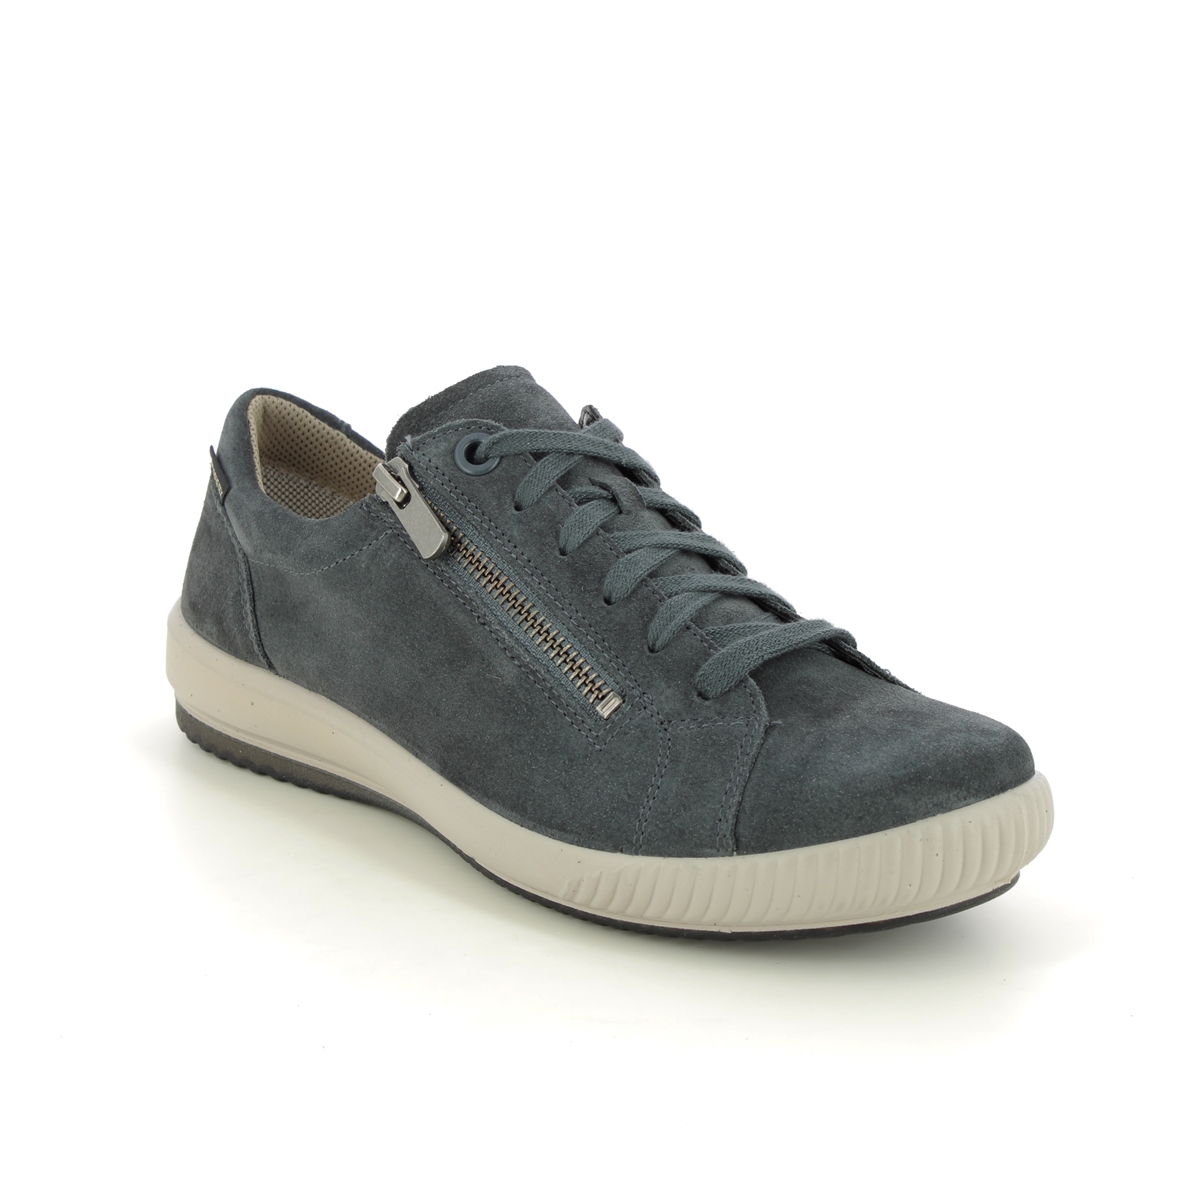 Legero Tanaro Gtx Zip Grey Womens Lacing Shoes 2000219-2930 In Size 3.5 In Plain Grey